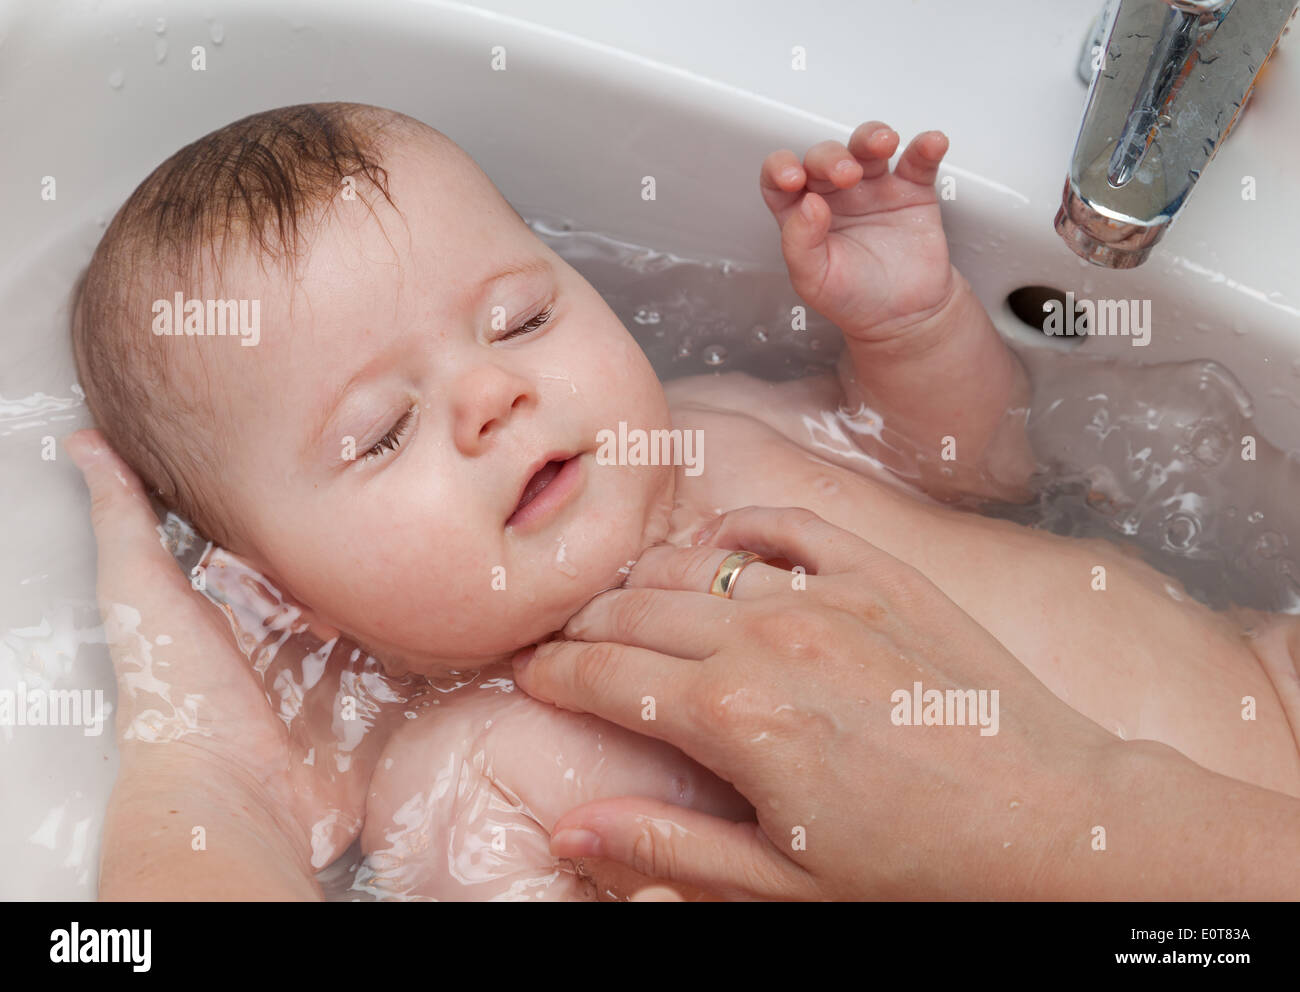 Baby wird gebadet - Baby bath Stock Photo